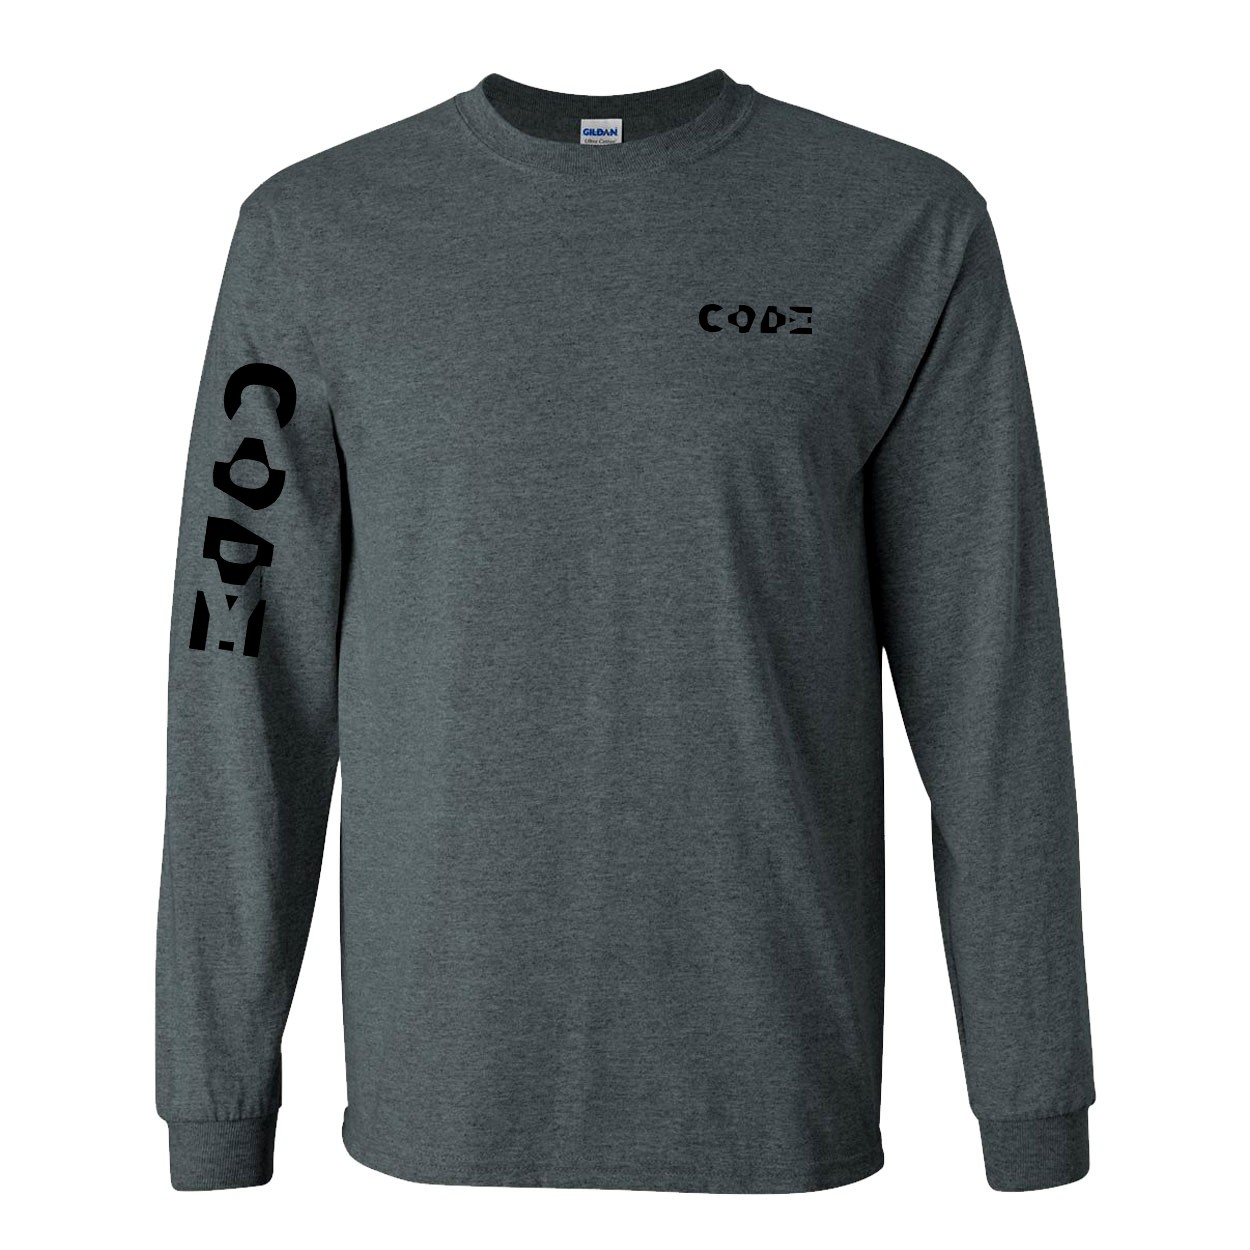 Code Tag Logo Night Out Long Sleeve T-Shirt with Arm Logo Dark Heather Gray (Black Logo)